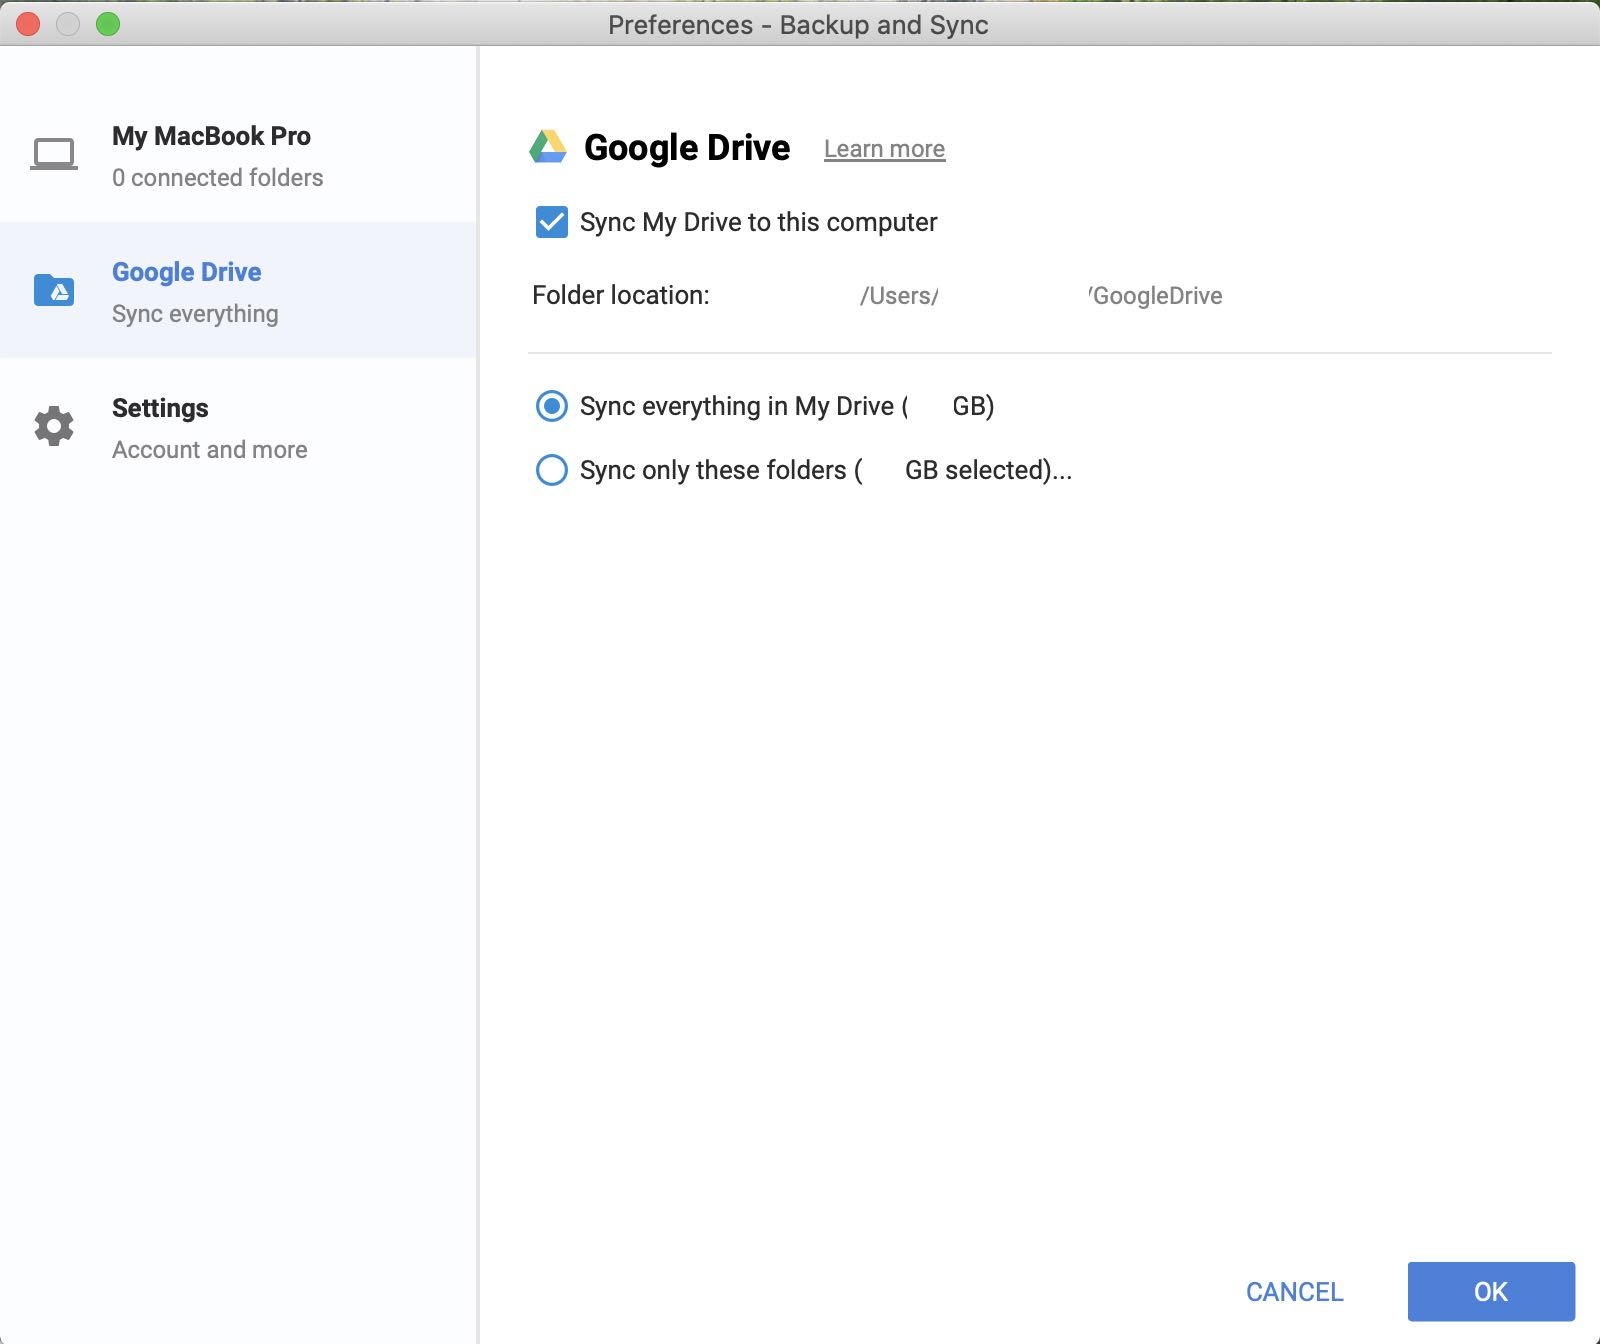 screenshot of preferences for Google drive desktop application, showing Google Drive tab